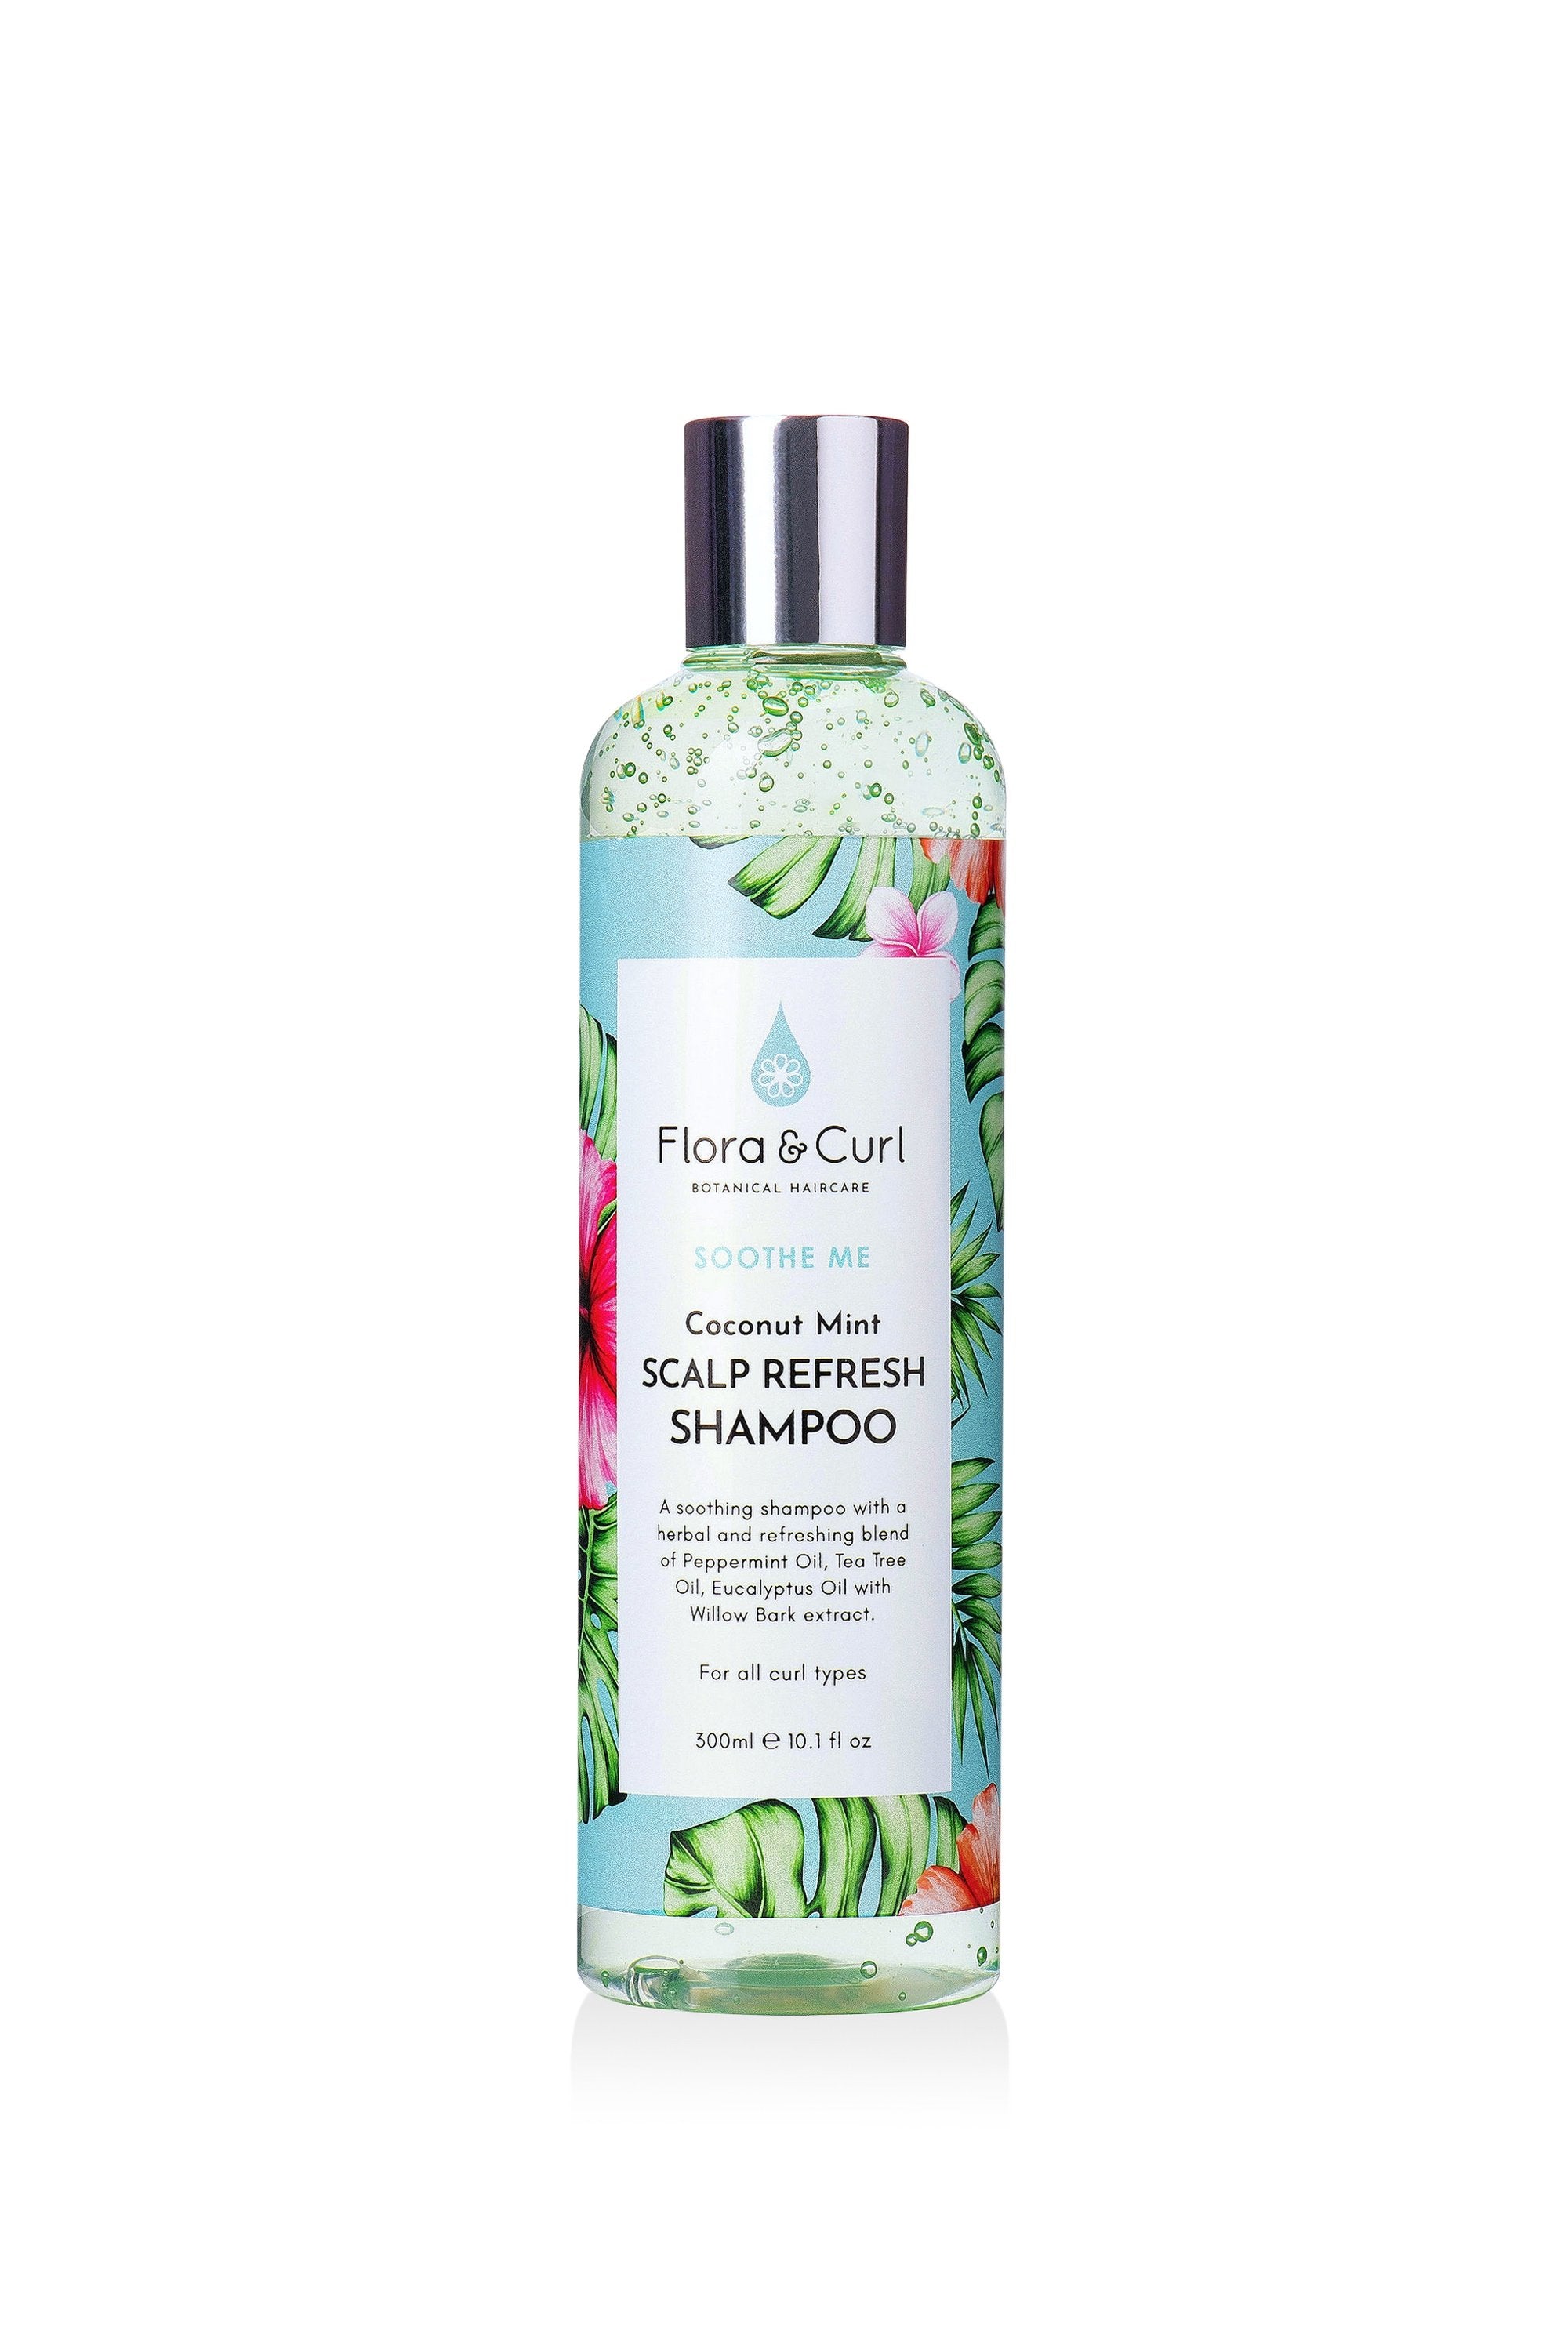 Flora & Curl - Soothe Me Coconut Mint Scalp Refresh Shampoo 300ml